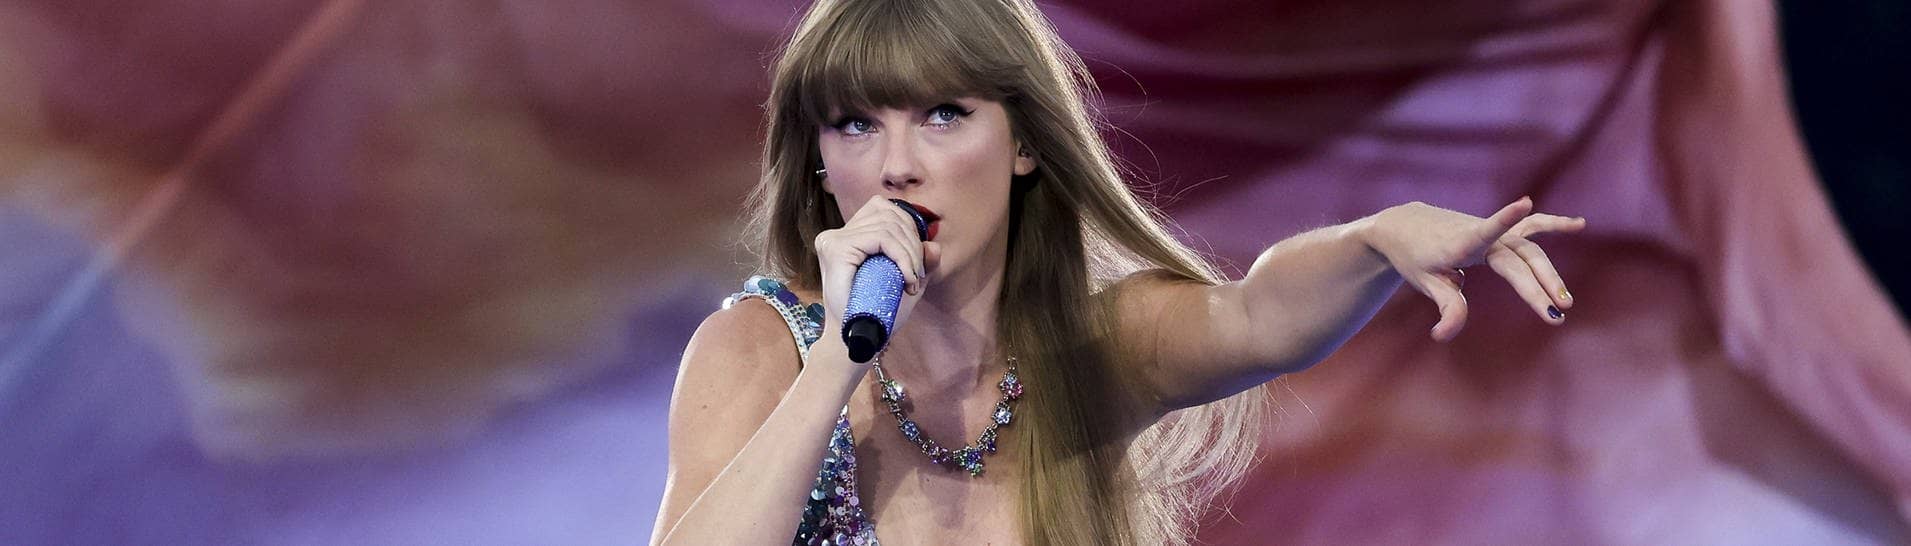 Taylor Swift - Student trackt Privatjets: Jetzt droht Taylor Swift ihm mit einer Klage